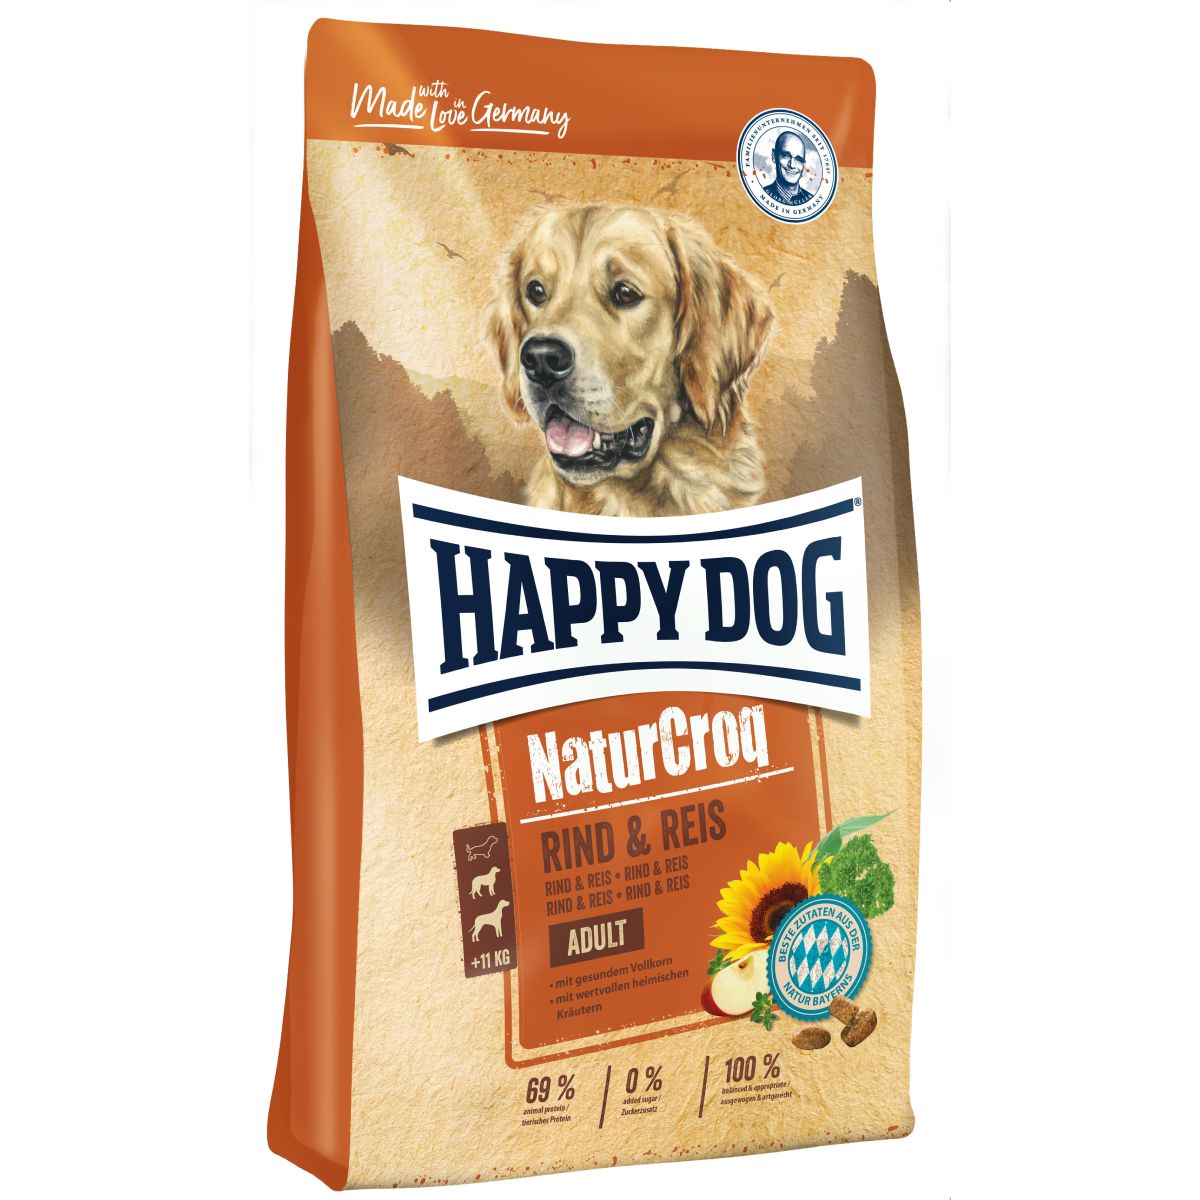 Корм для собак говядина с рисом. Хэппи дог натур крок ягненок рис 15 кг. Happy Dog НАТУРКРОК (ягненок/рис) -15кг. Натур крок ягненок 15кг. Хэппи дог корм для собак.